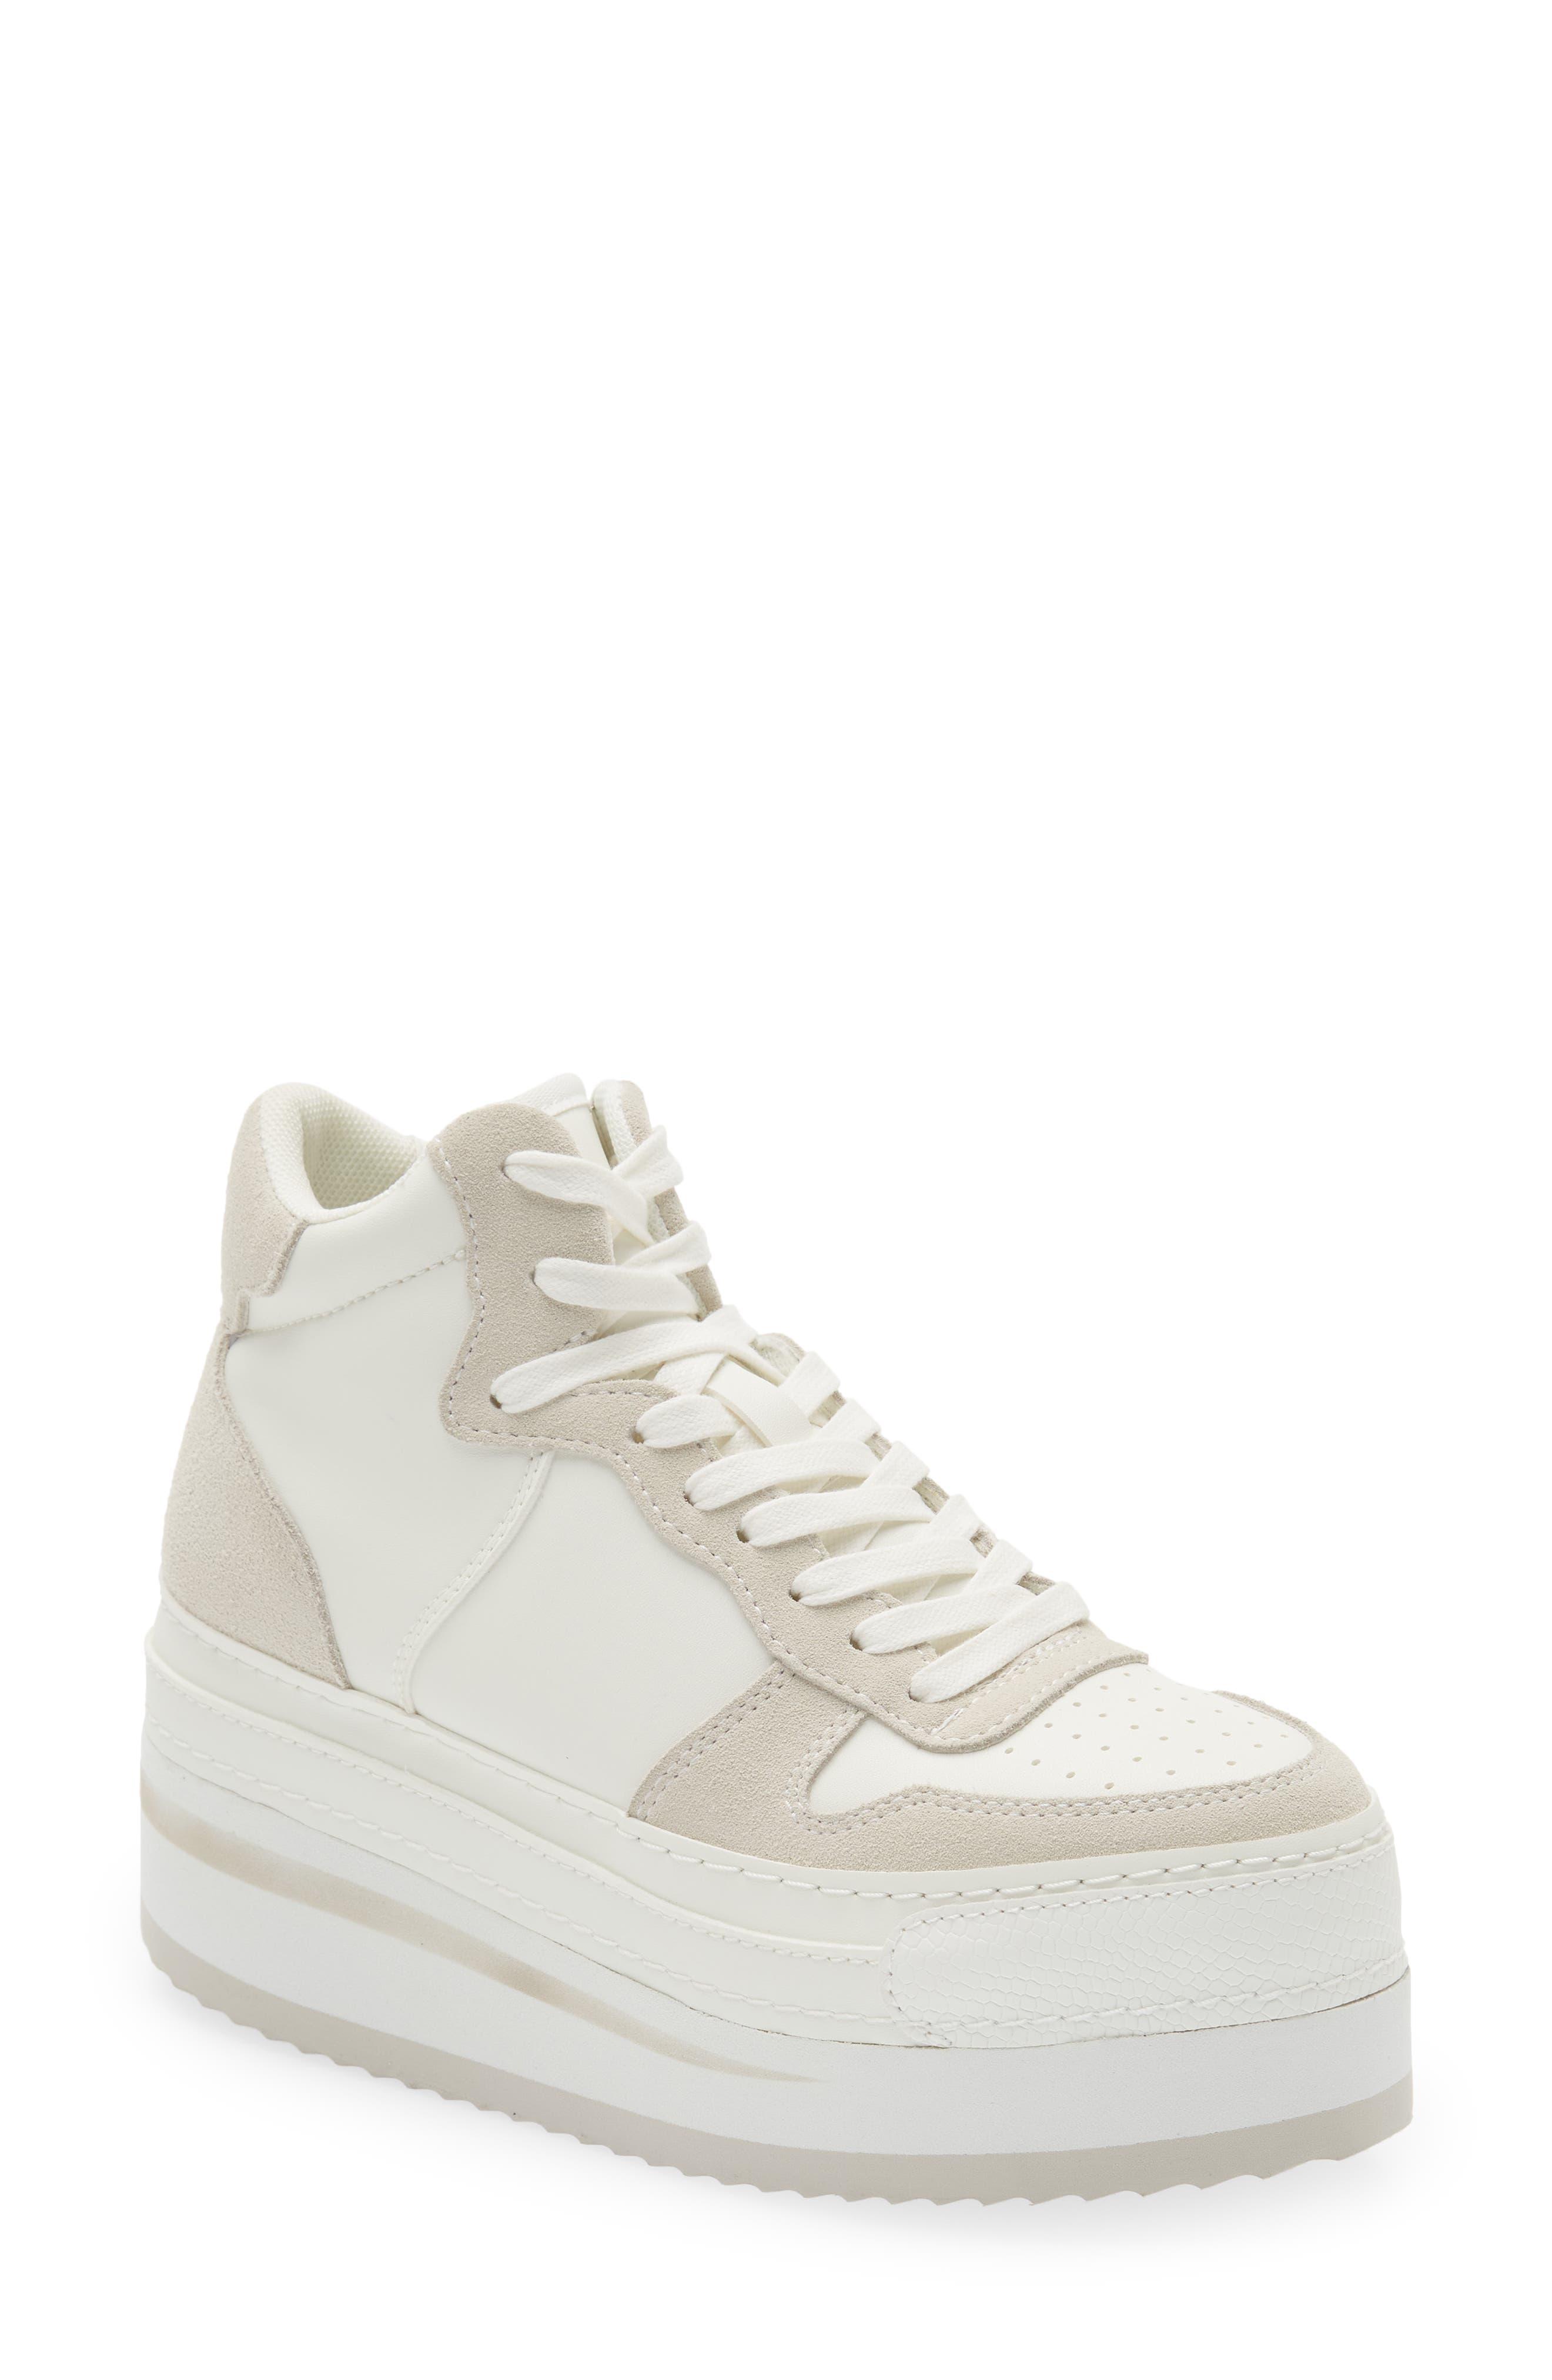 Steve Madden Brodiee Platform Sneaker in White | Lyst